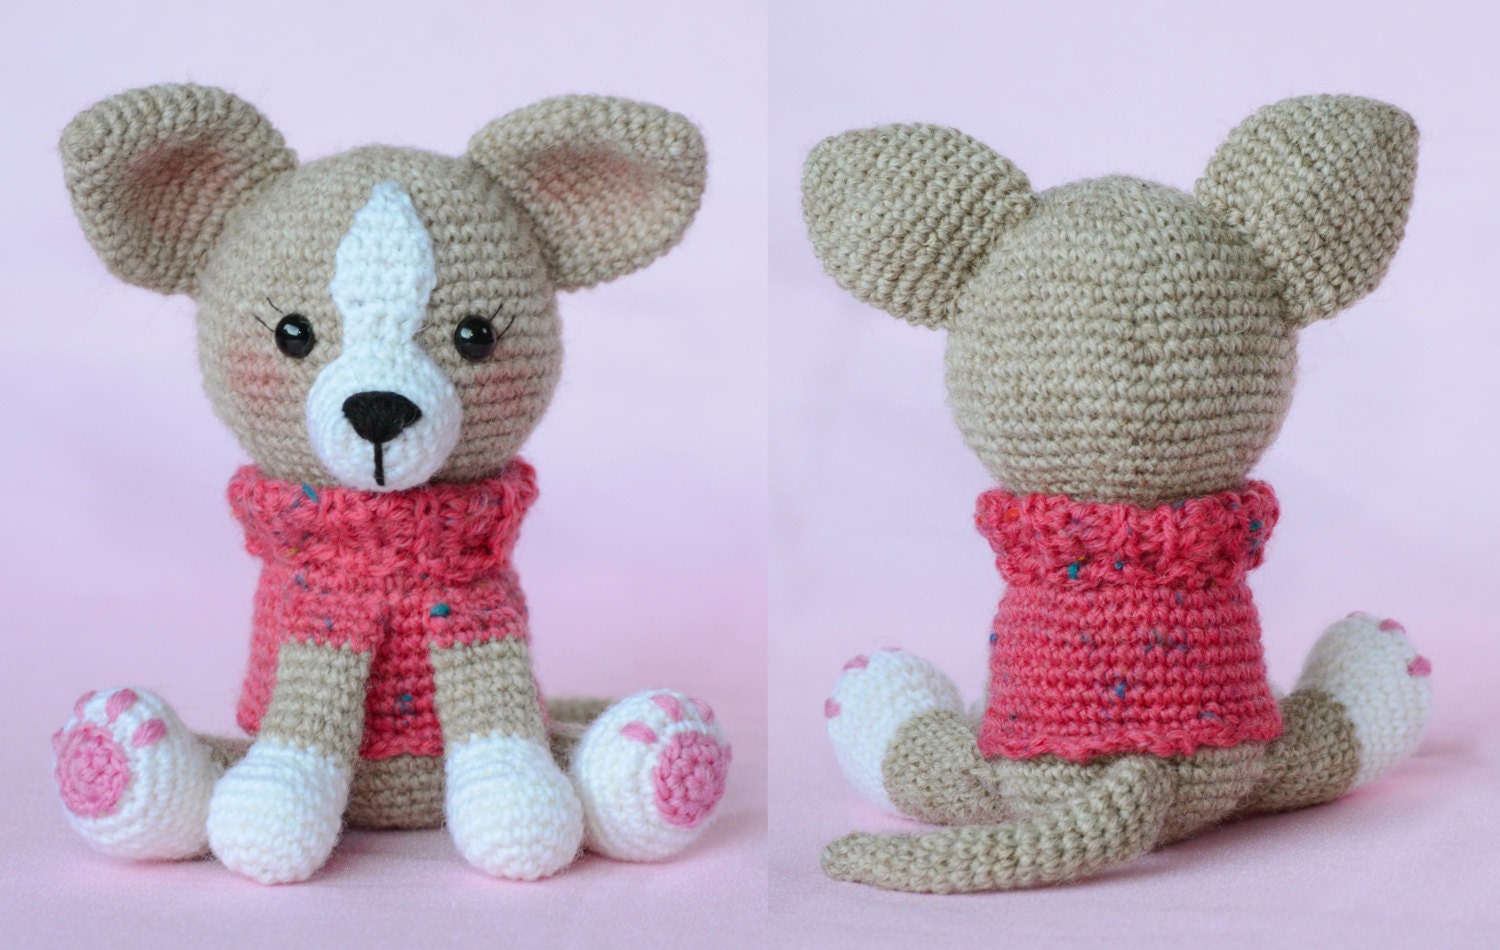 Amigurumi Patterns, Crochet Dolls, Crochet Gifts, Crochet Patterns, Cupcake...